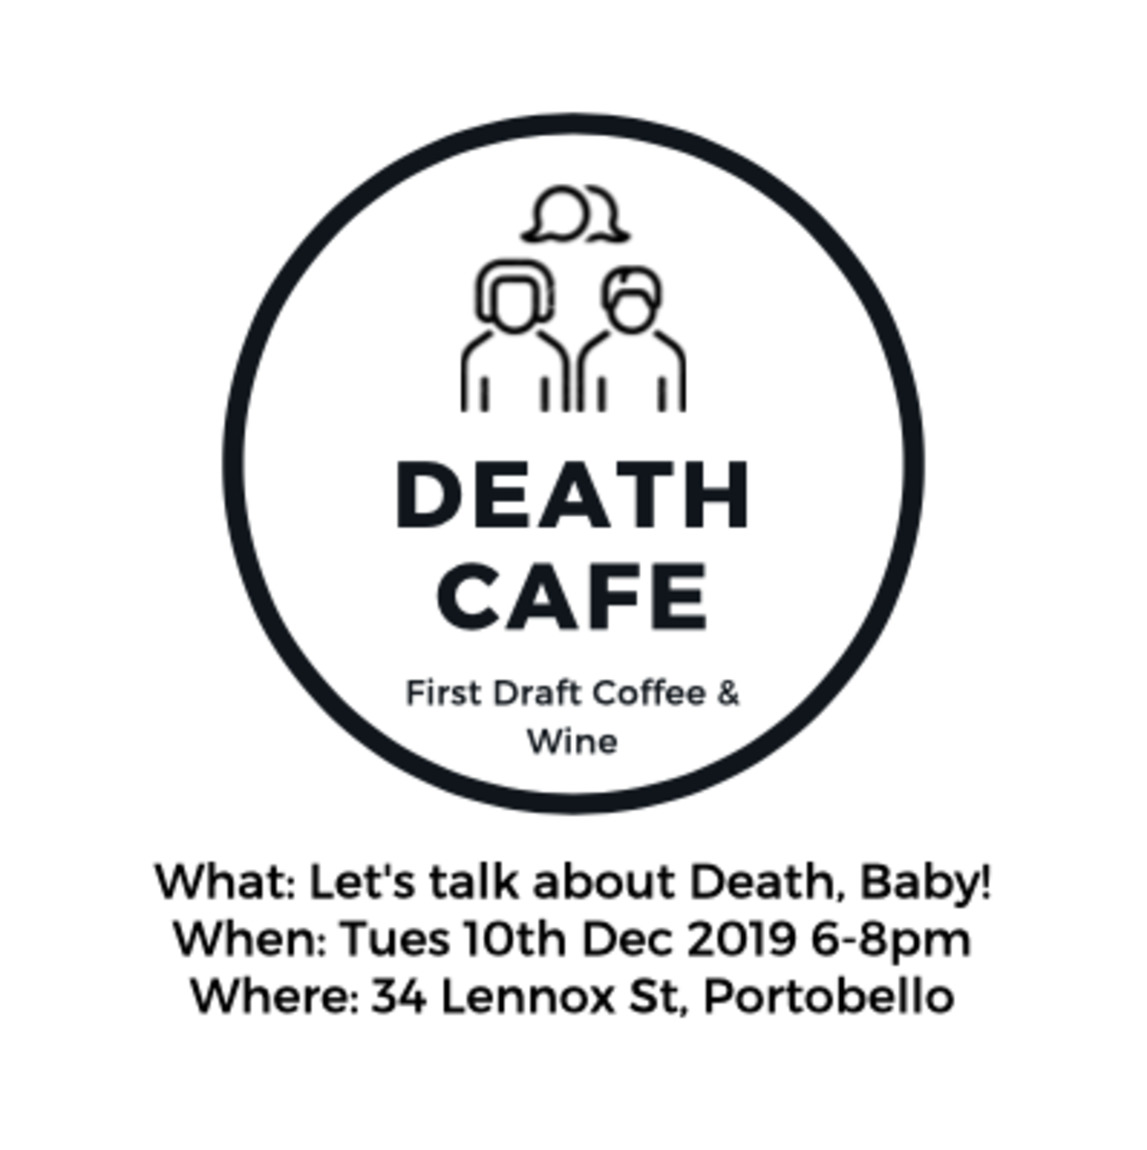 Death Cafe - Dublin - First Draft Coffee & Wine